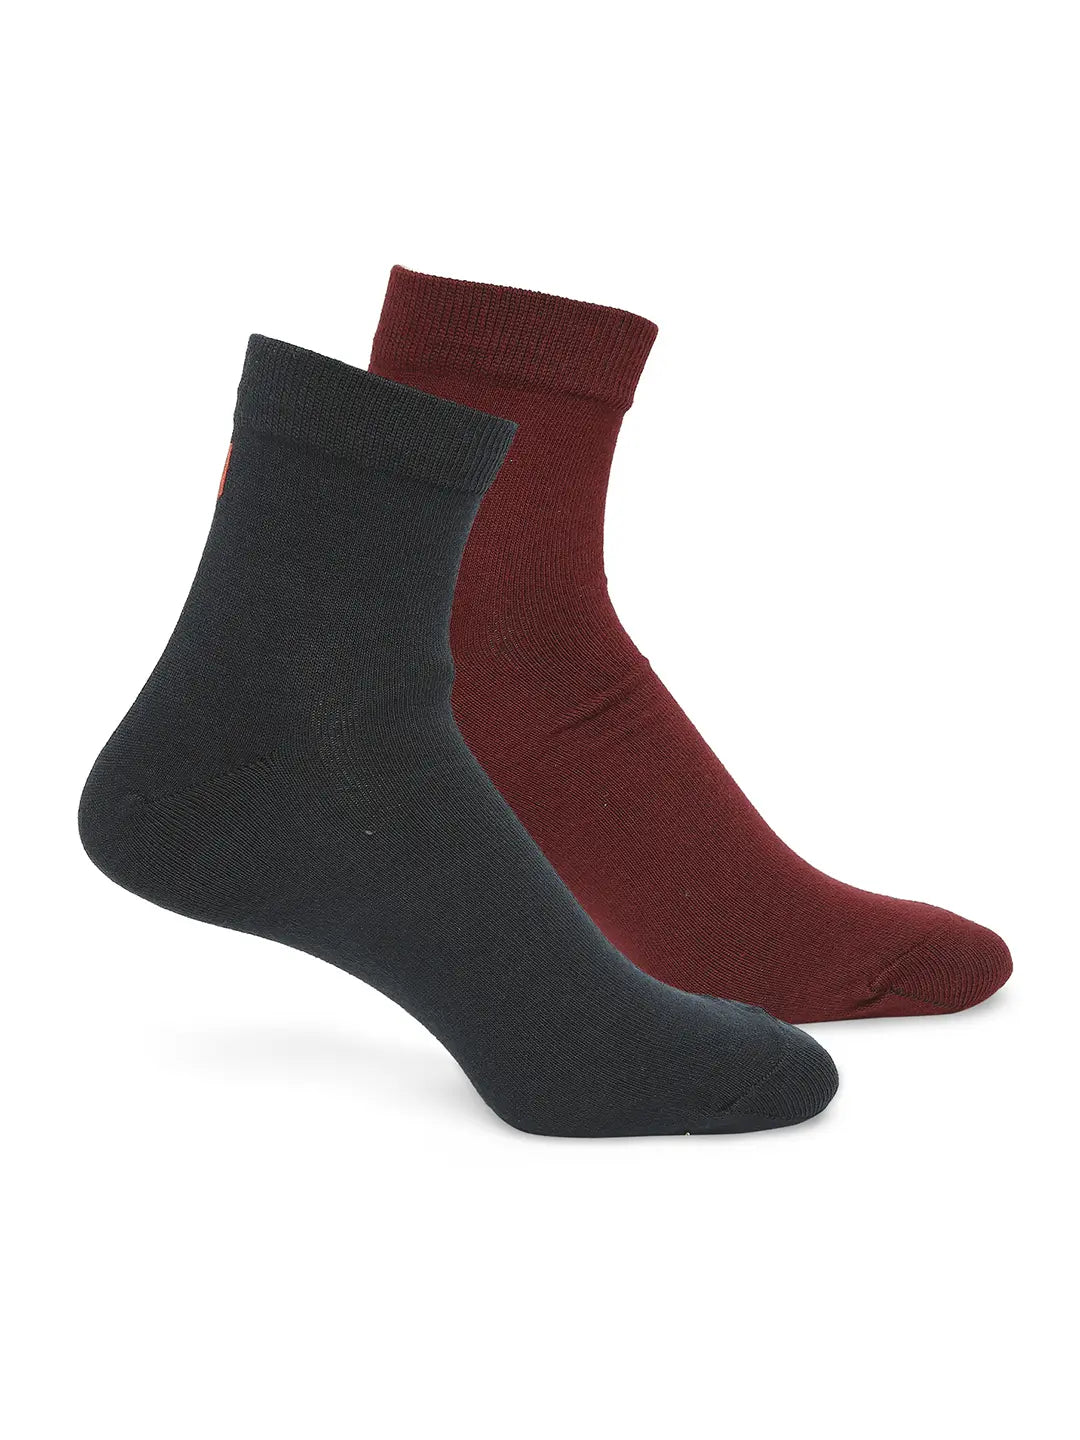 Men Premium Navy & Maroon Ankle Length Socks - Pack Of 2- Underjeans by Spykar